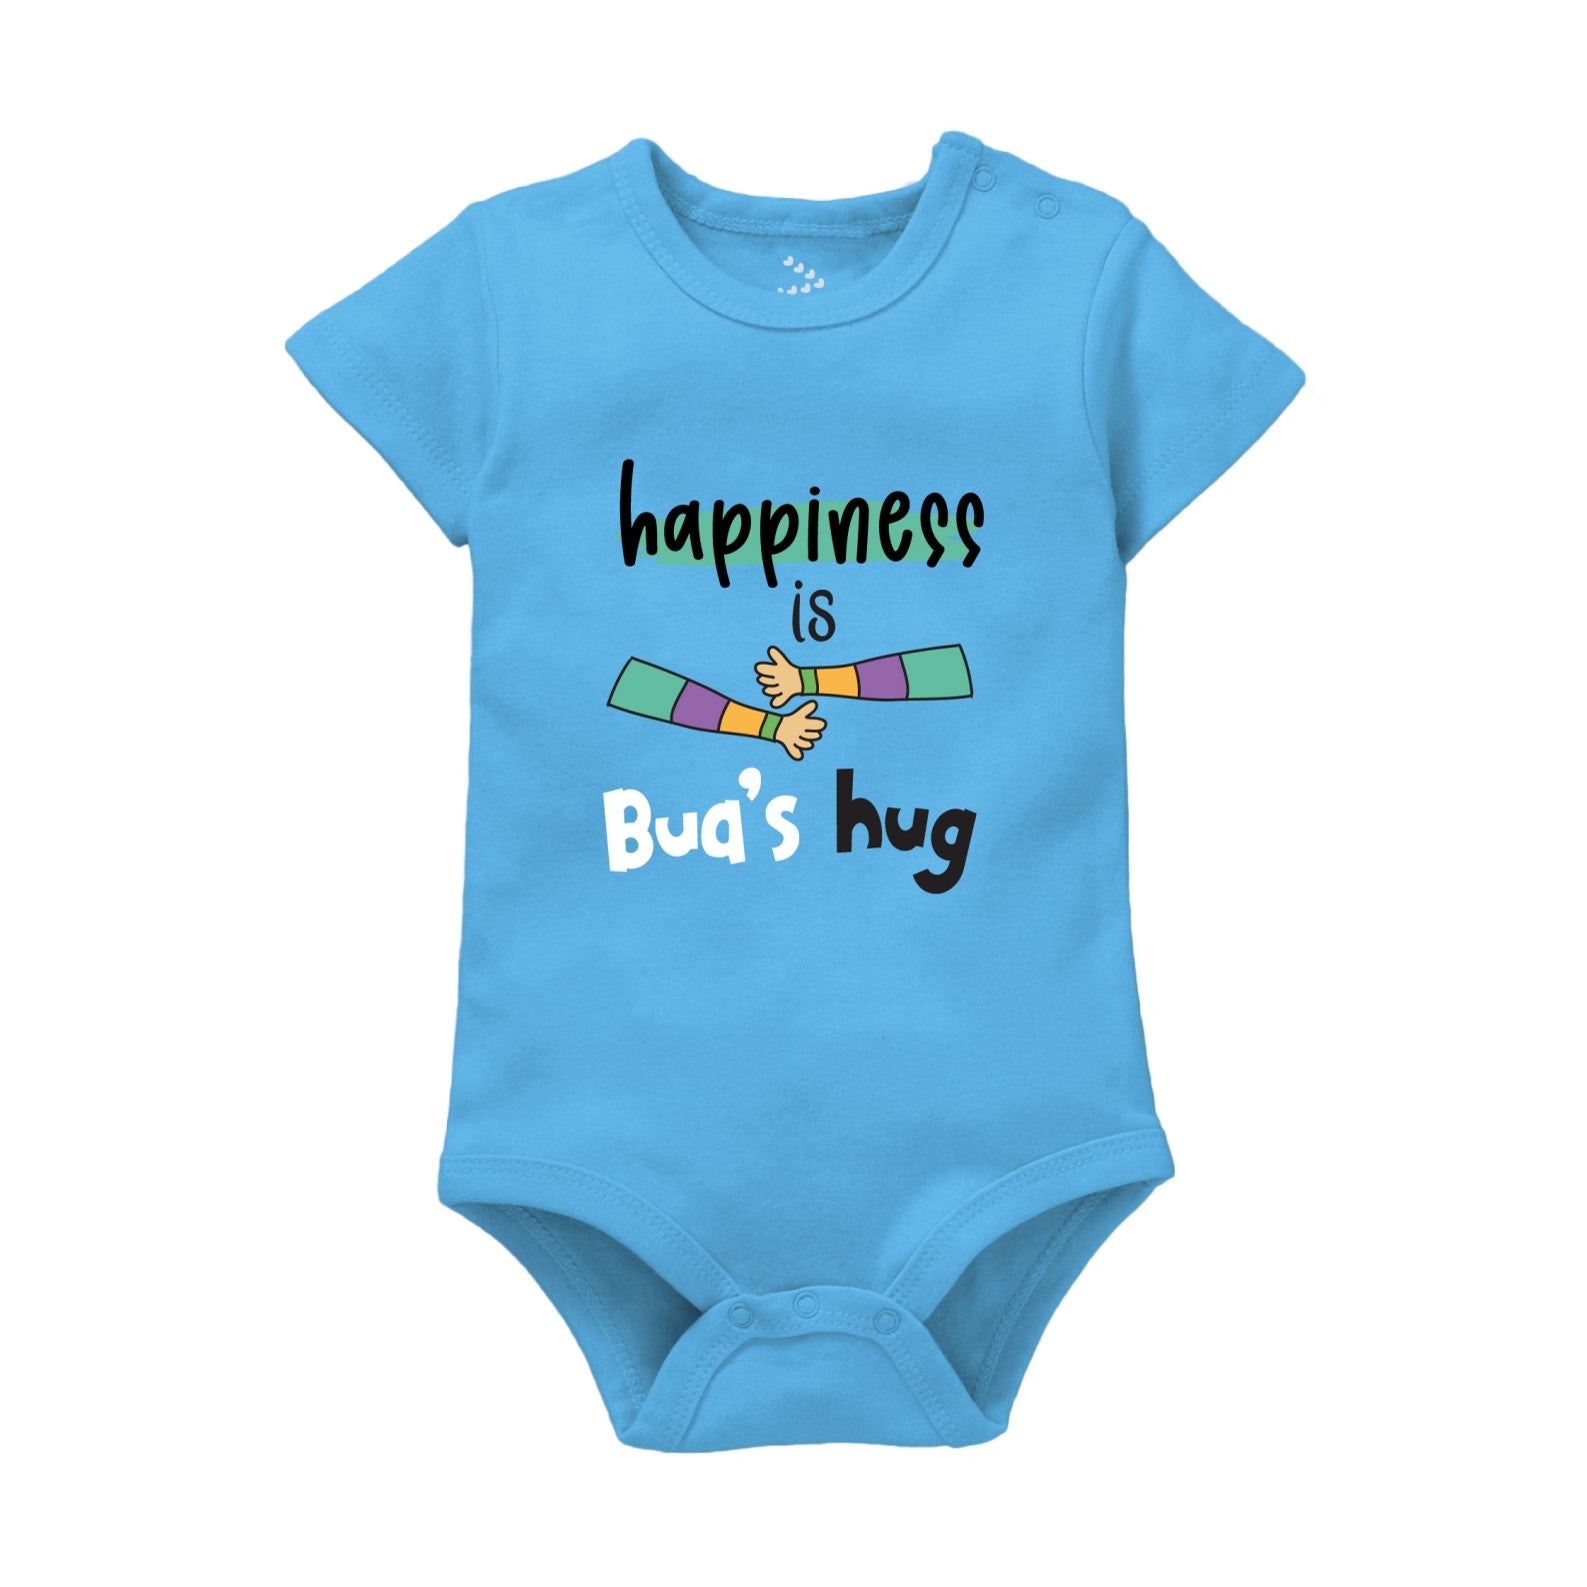 Happiness Is Bua's Hug Printed Baby Onesie - Light Blue